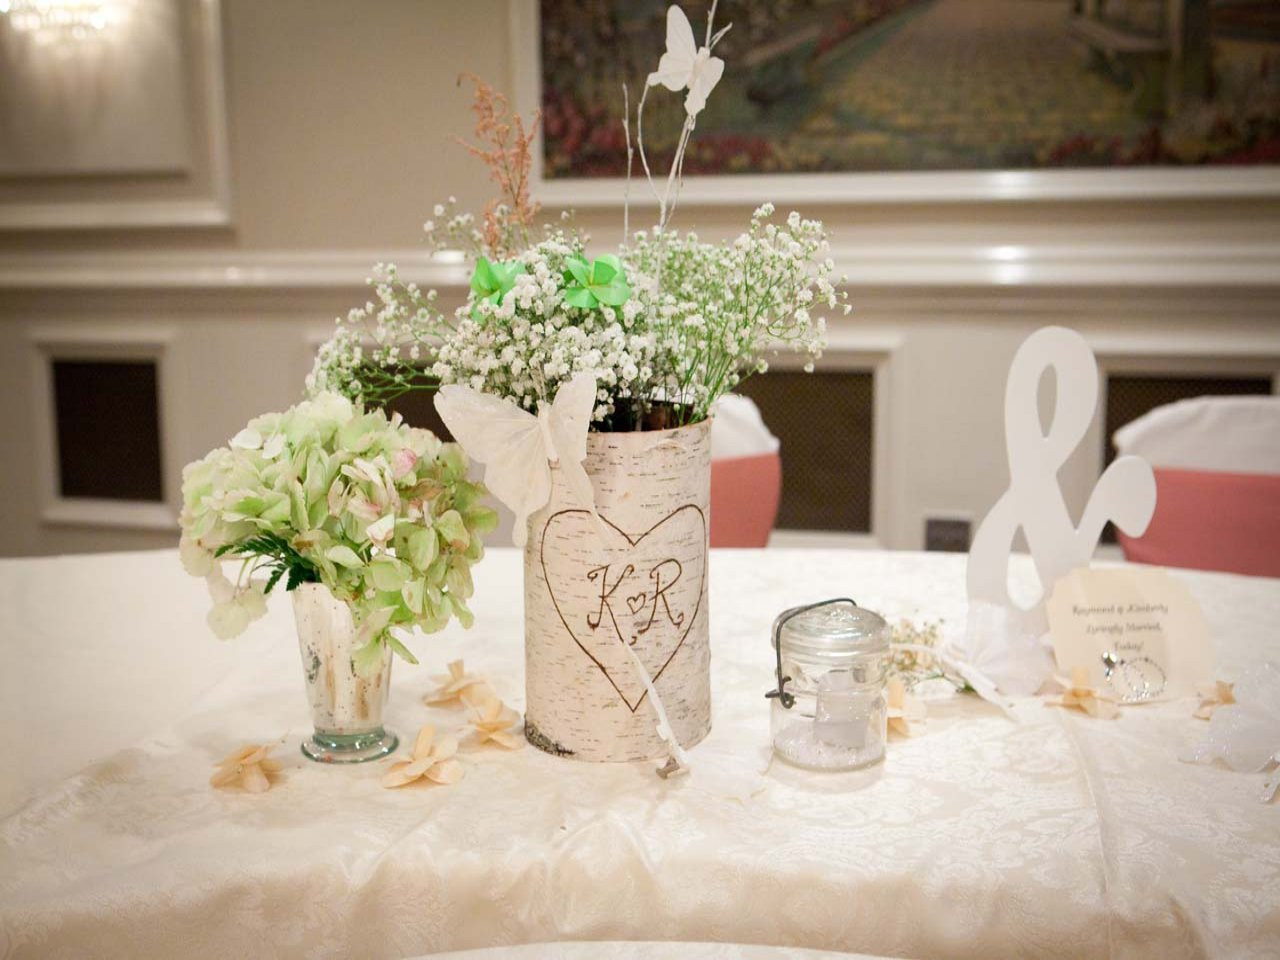 DIY Table Decorations For Weddings
 DIY Wedding Table Decorations Wedding and Bridal Inspiration